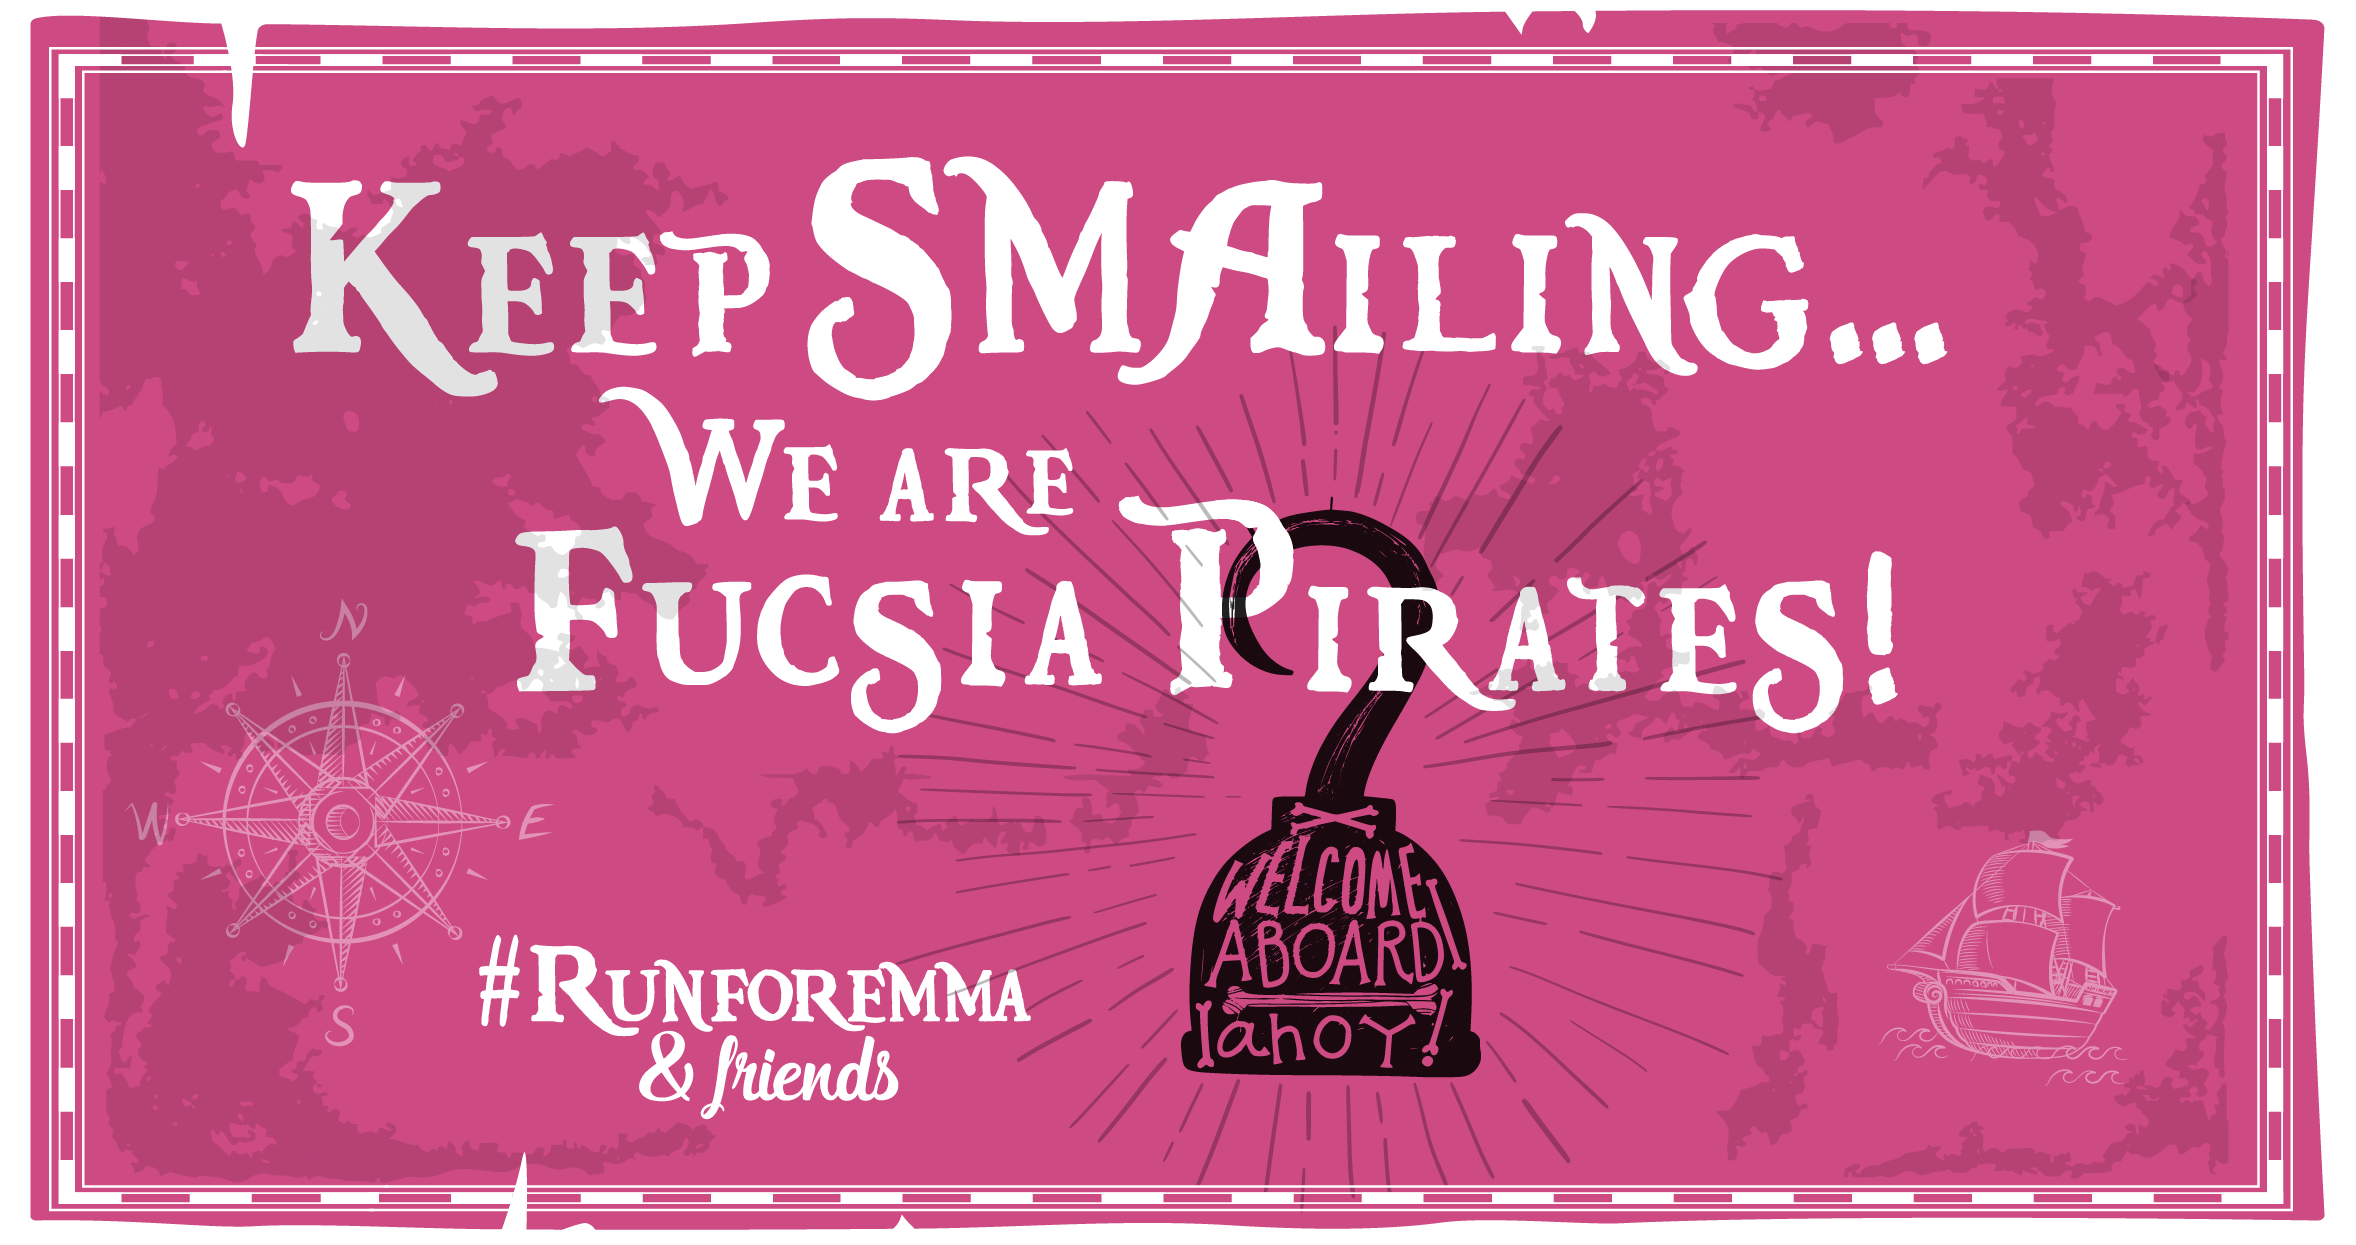 #KeepSMAiling2 - Fucsia Pirates-#RUNFOREMMA & friends 